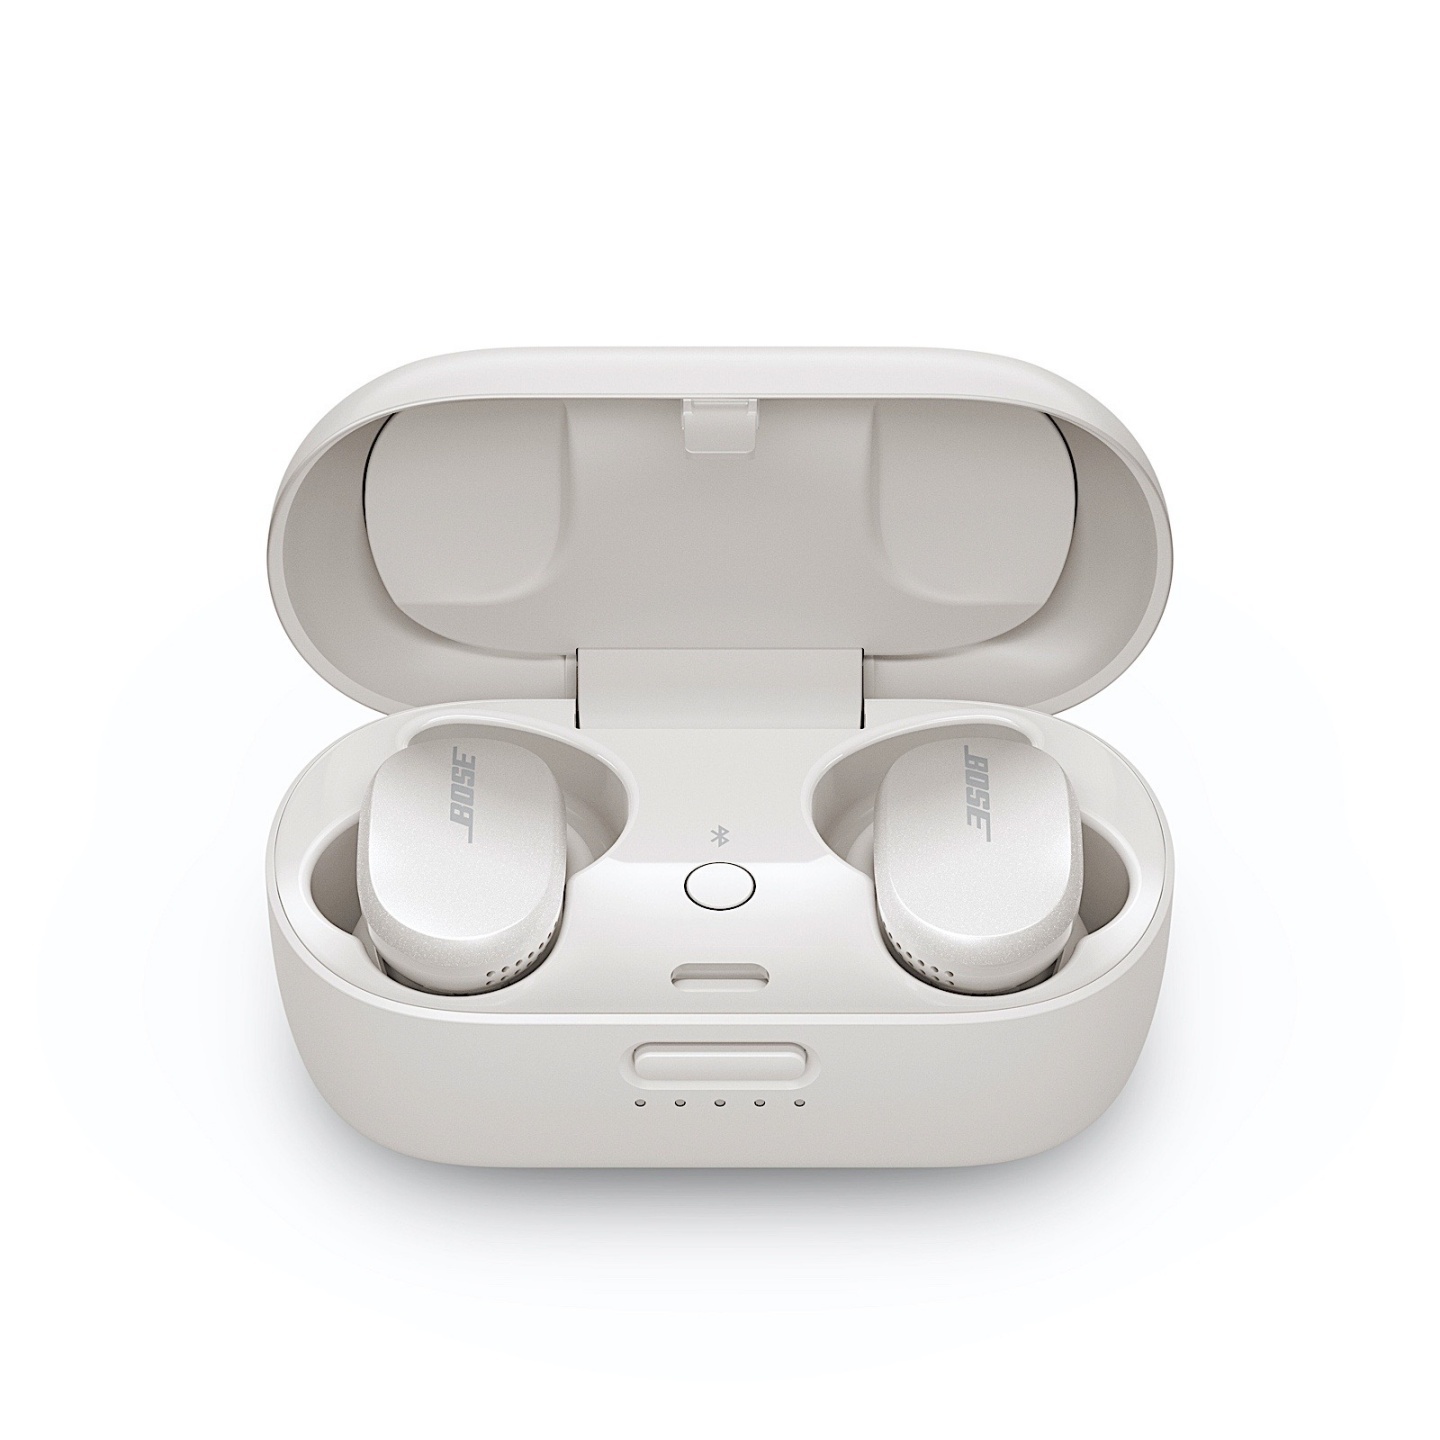 Bose 出真無線主動降噪耳機了！『 QC EarBuds 』售價 280 美元，運動耳機和三款音樂墨鏡同步推出